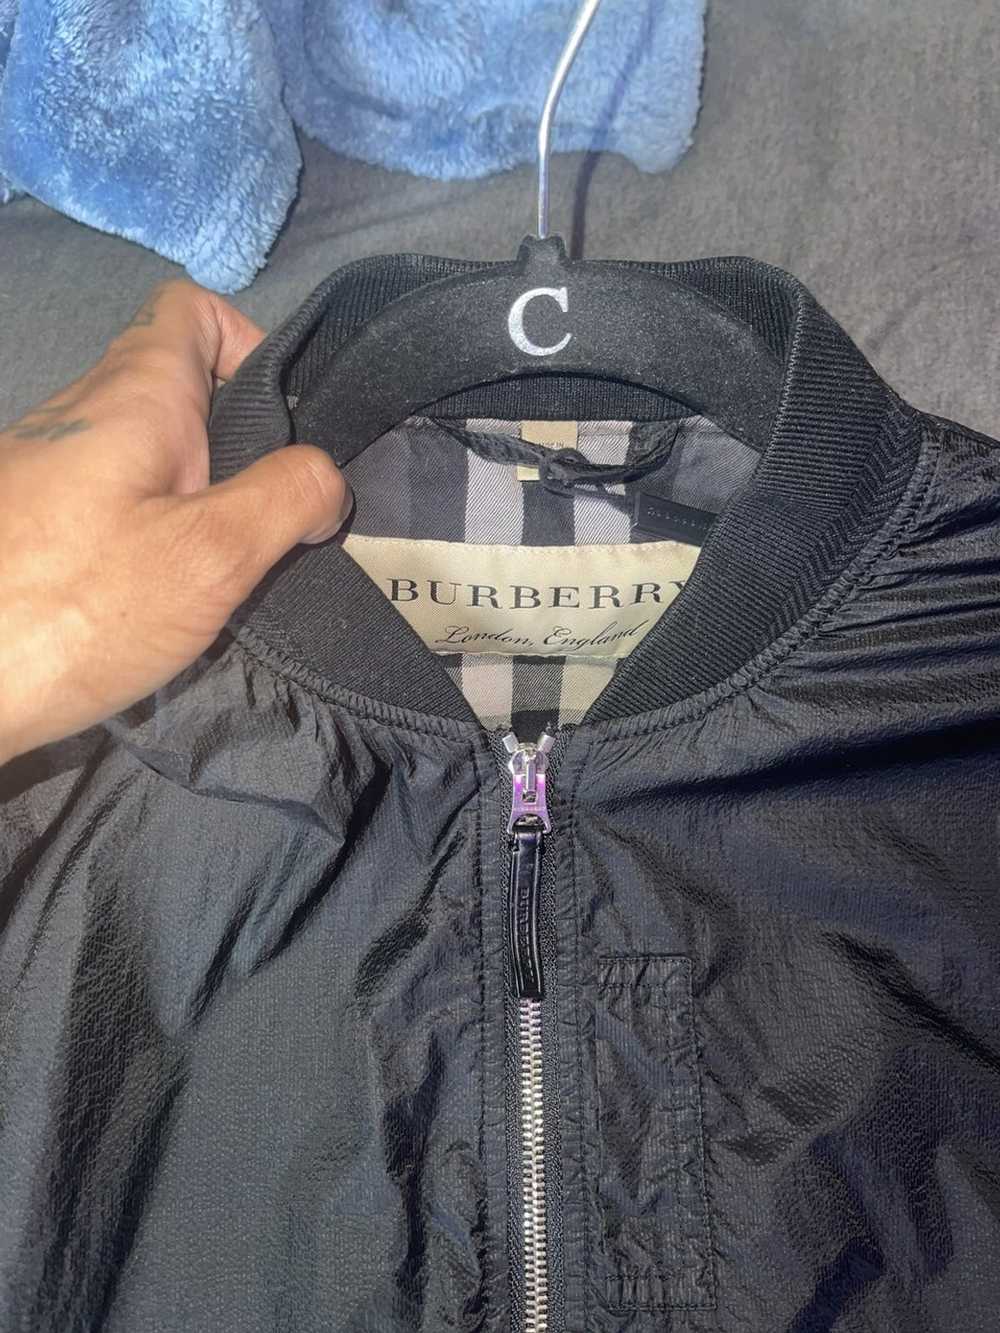 Burberry Burberry jacket - image 2